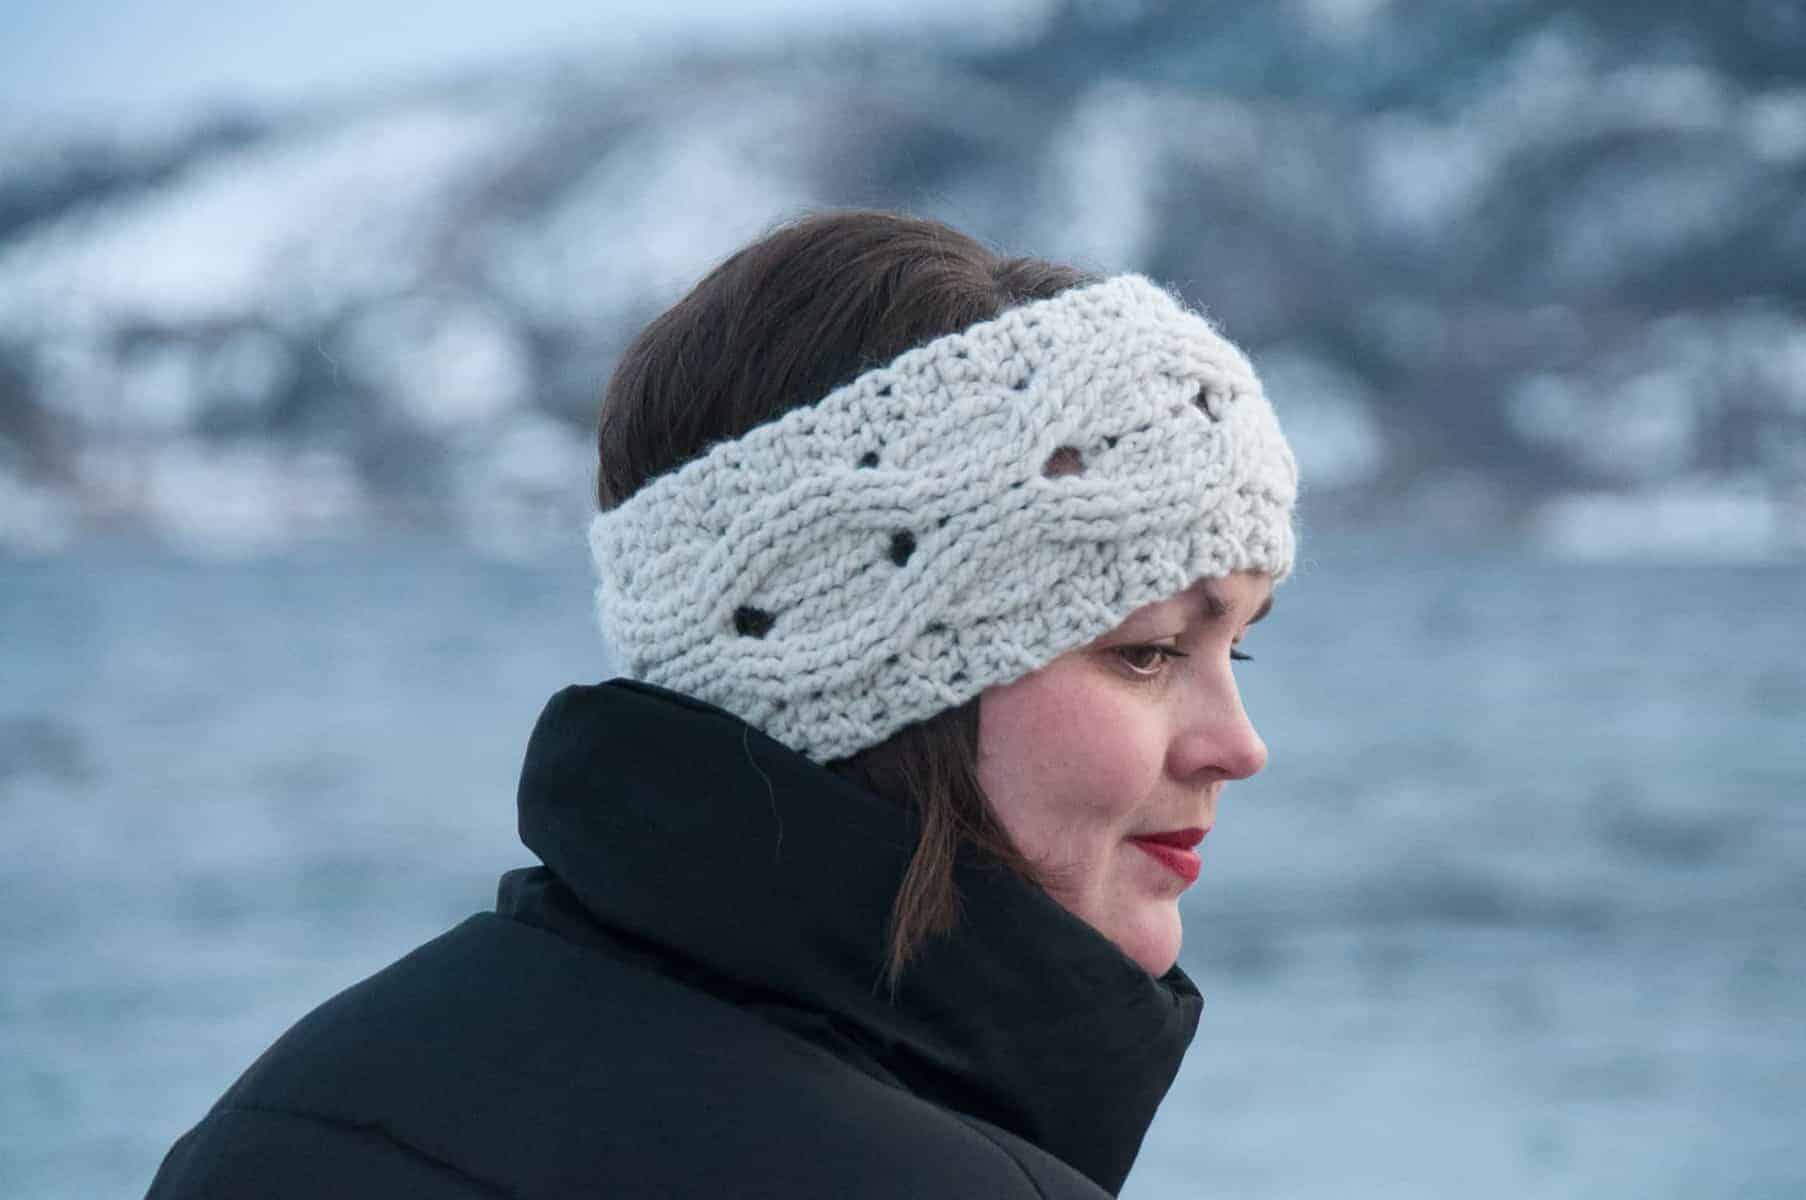 I Love Cables Crochet Headband - free crochet pattern